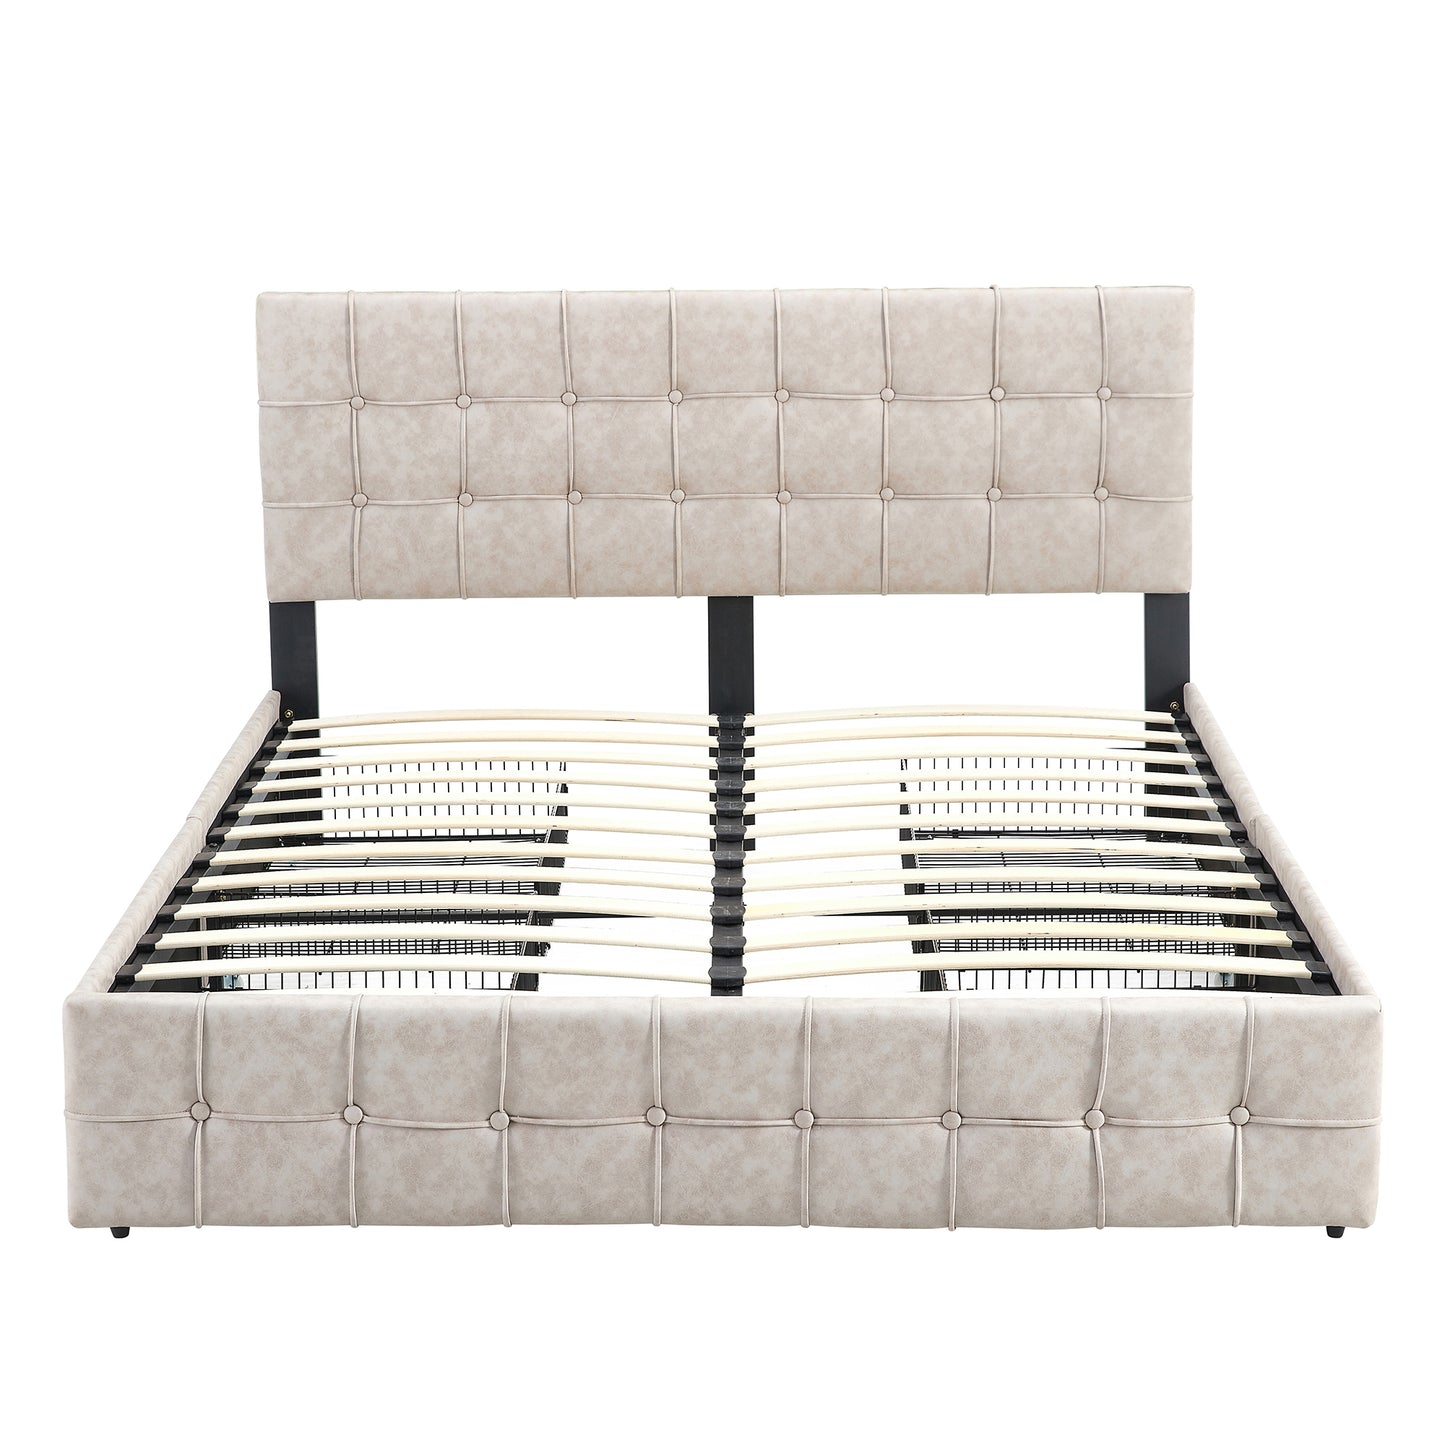 Beige Full Size Upholstered Platform Bed Frame with Adjustable Headboard and 4 Drawers Storage